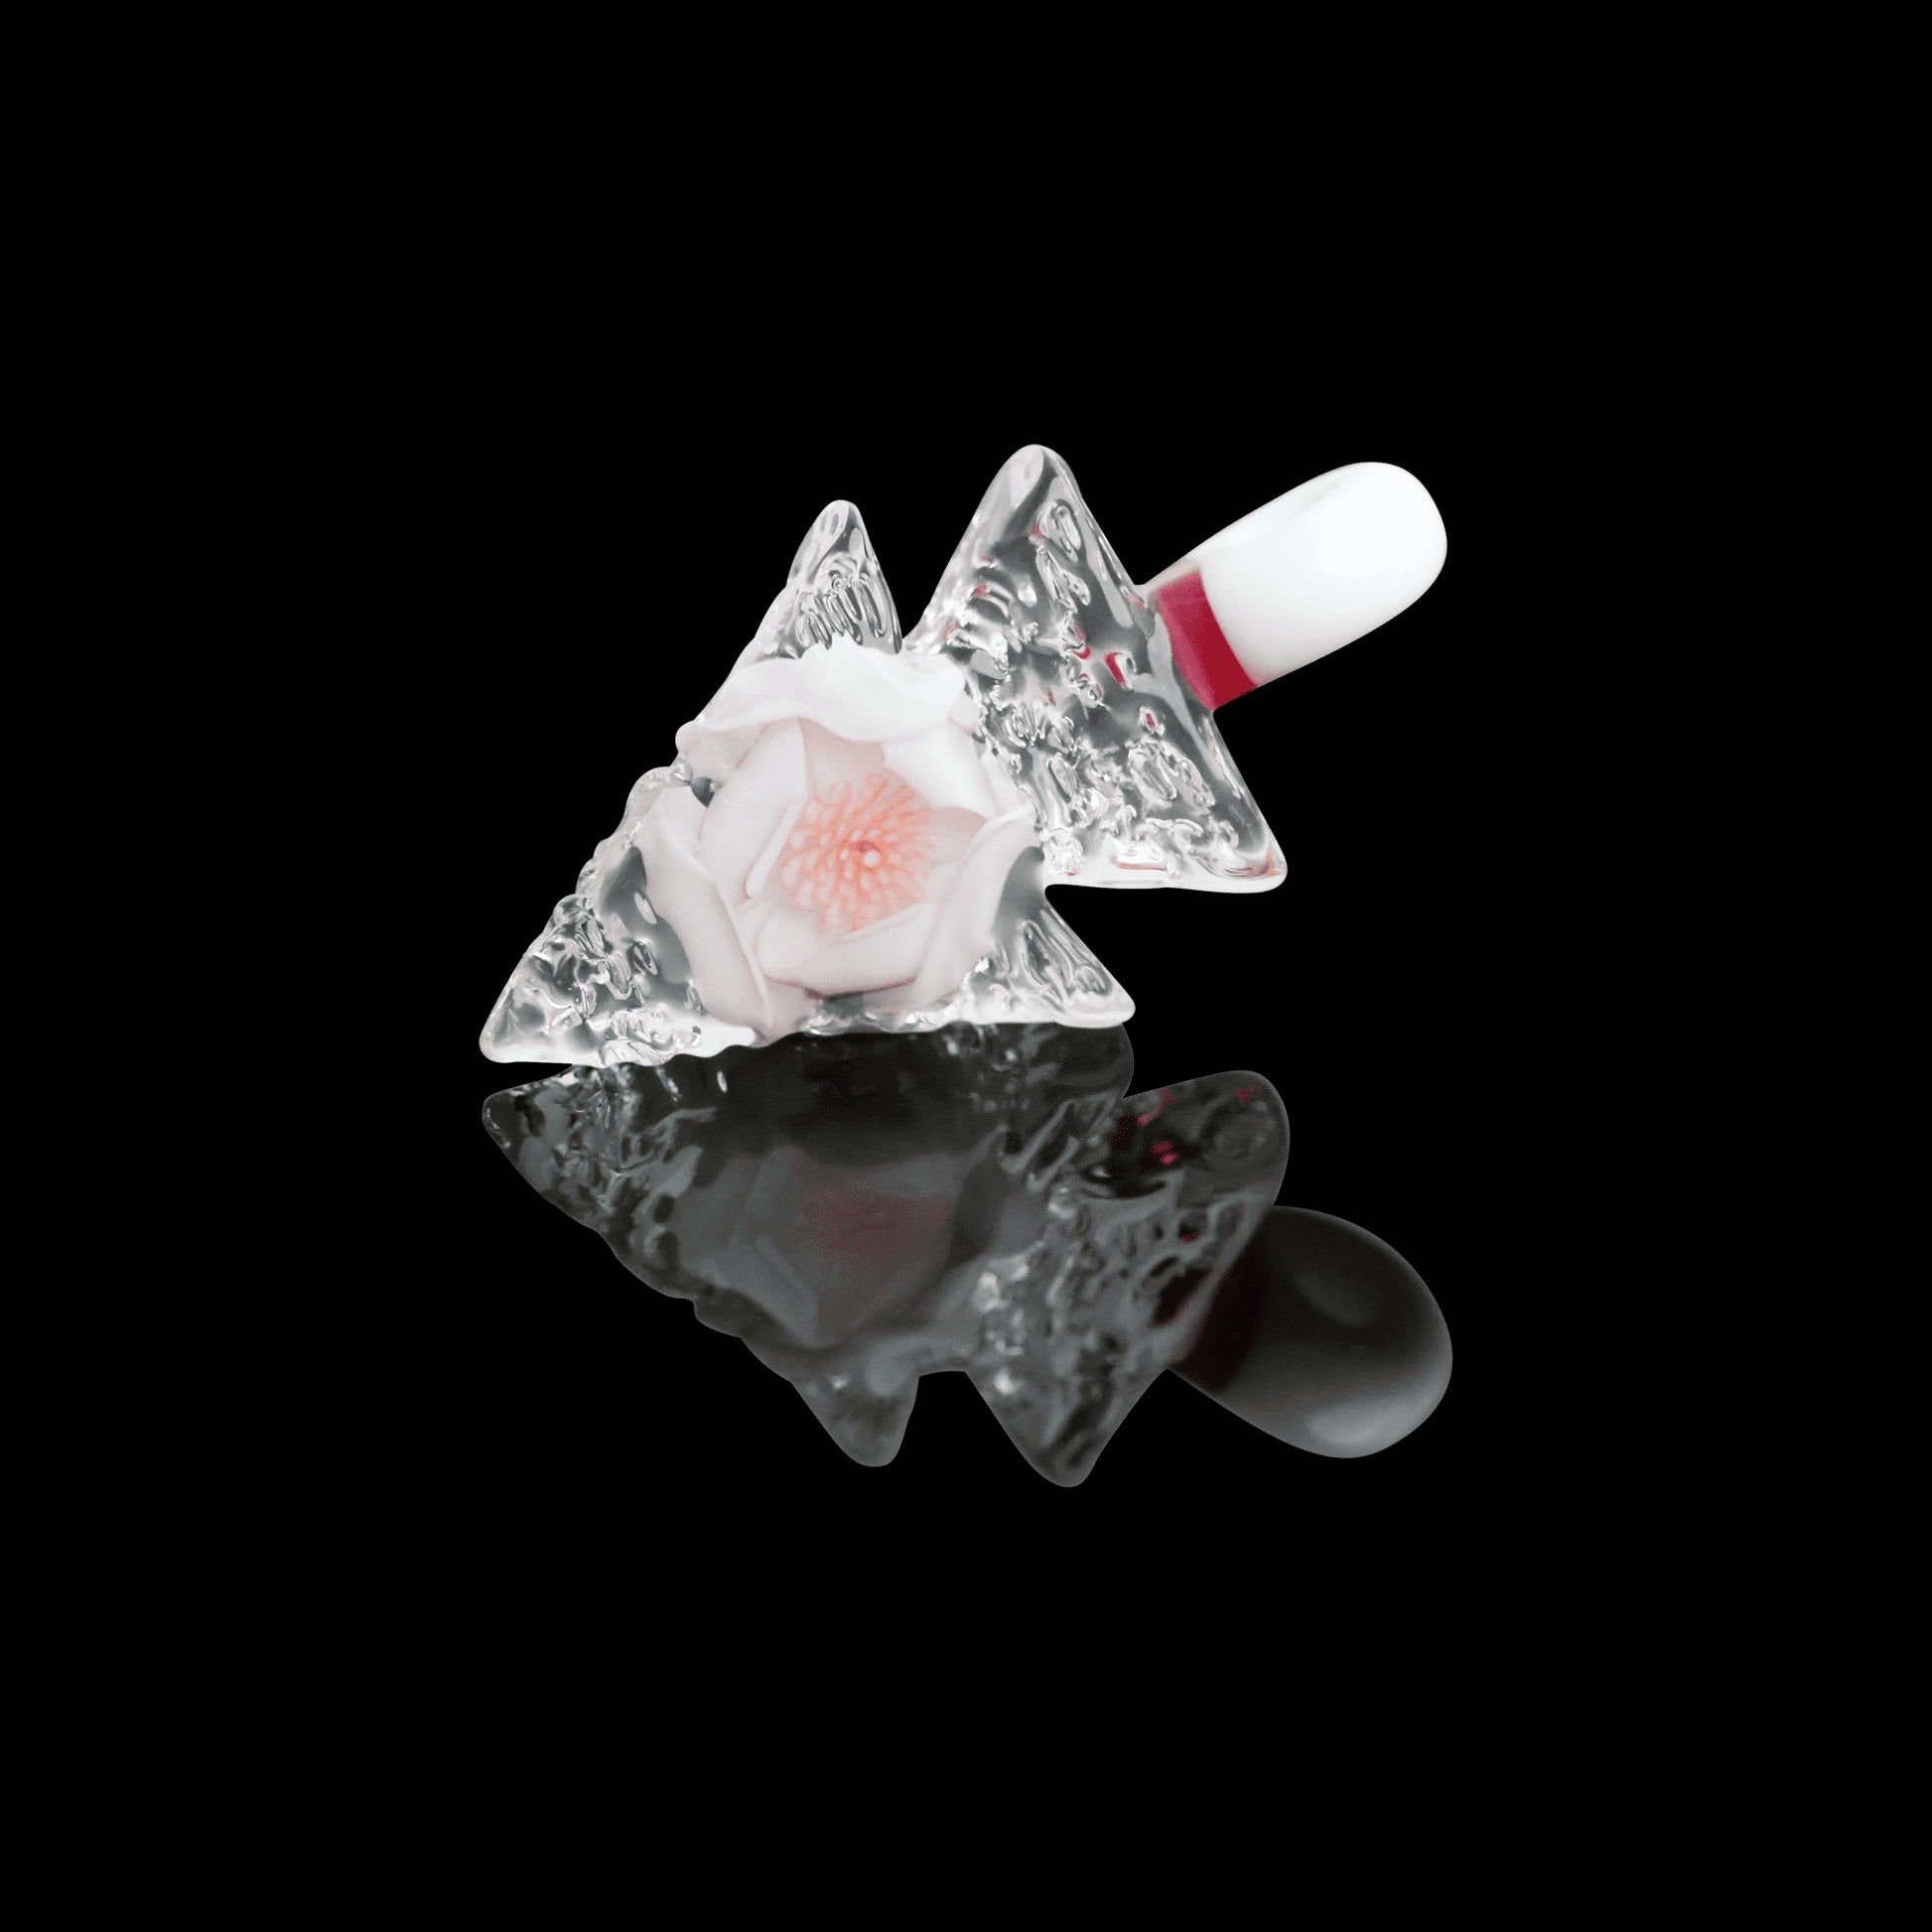 heady glass pendant - Arrowhead Collab Pendant by Jared DeLong x Elks That Run (2022 Drop)